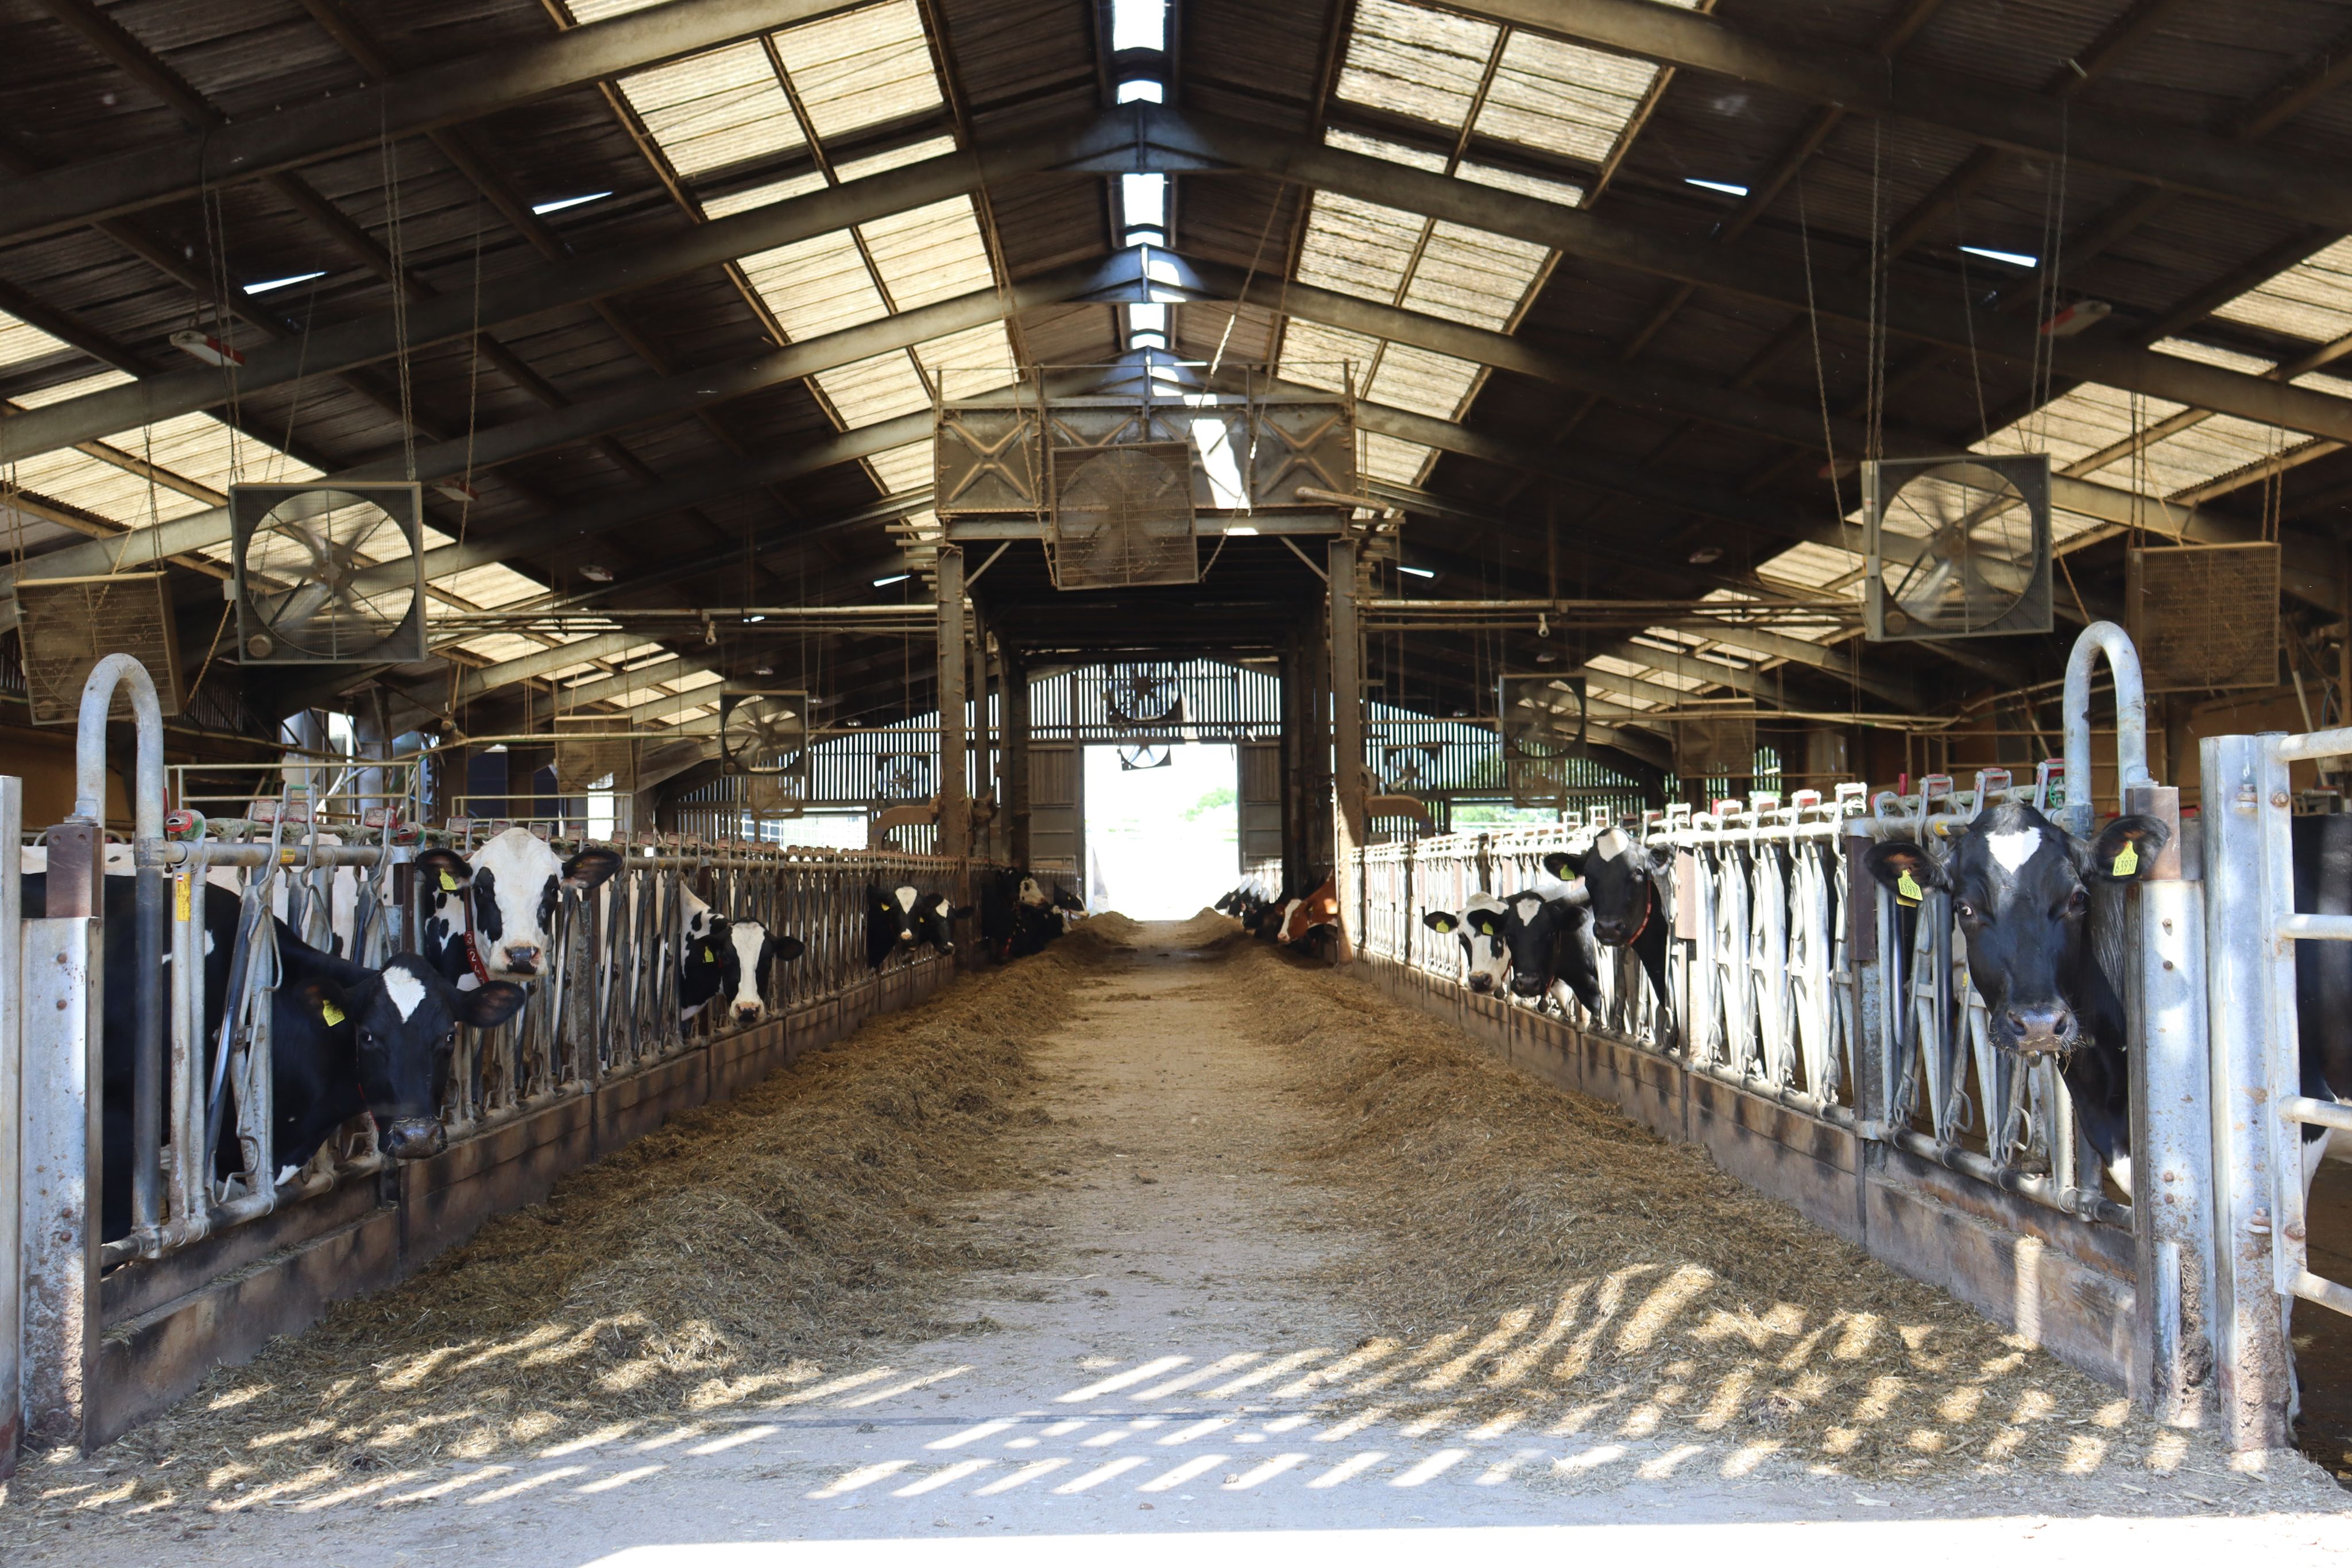 Dairy cows in the barn feeding on grain